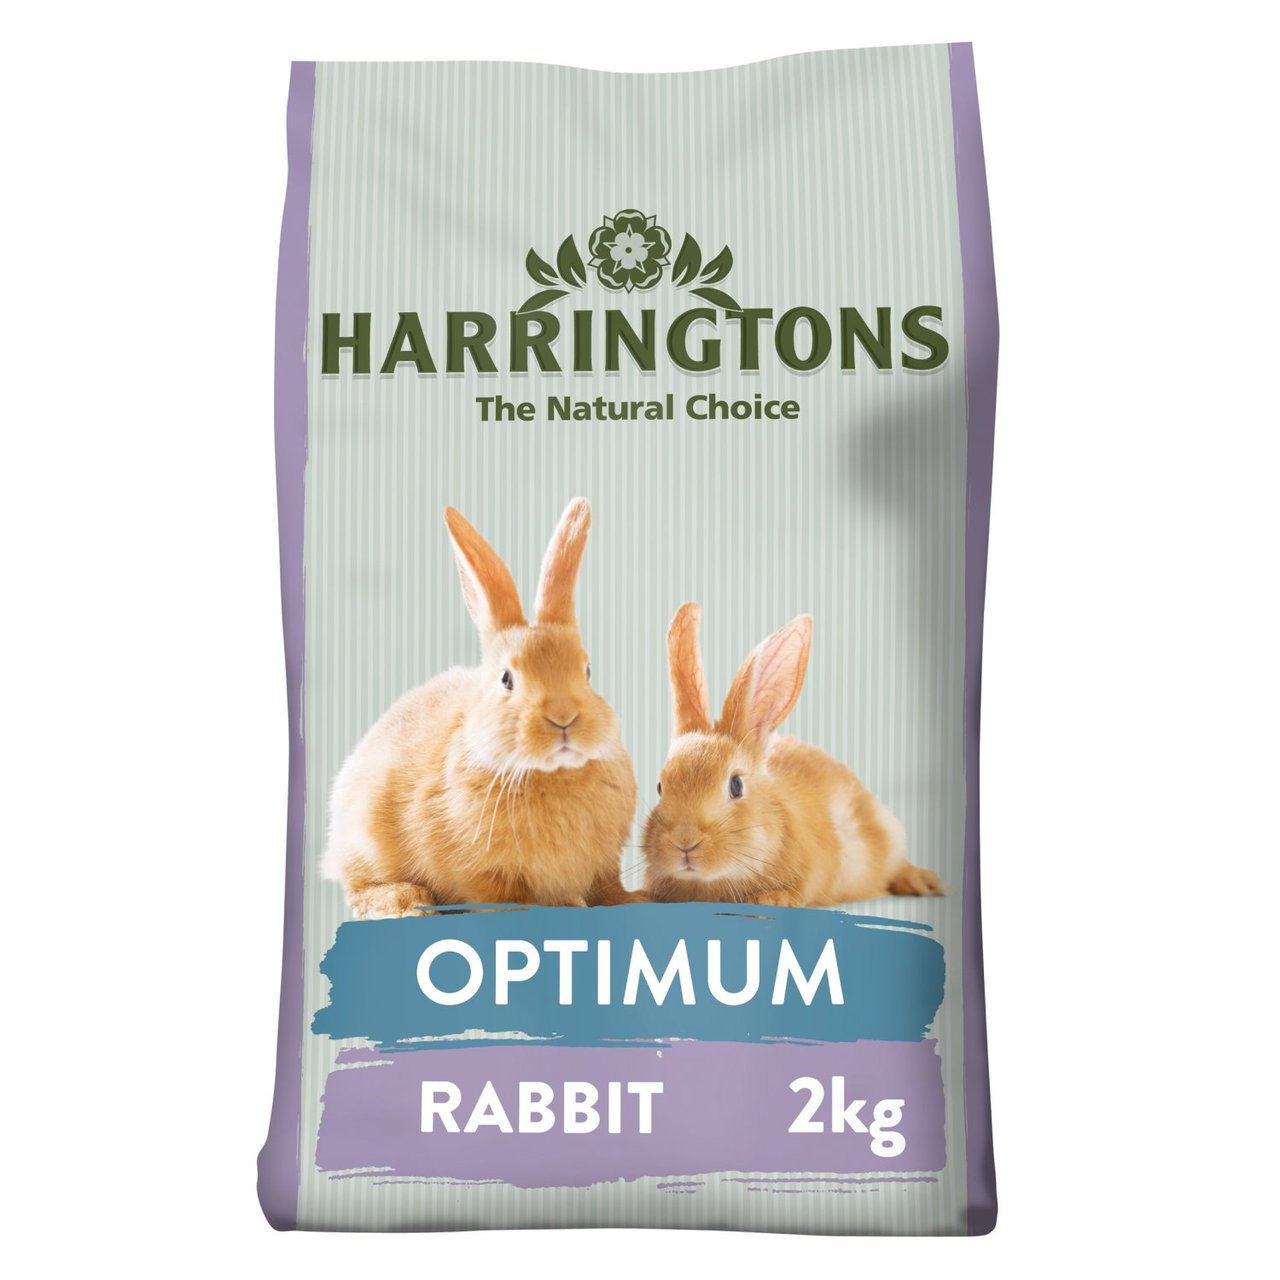 An image of Harringtons Optimum Rabbit Food